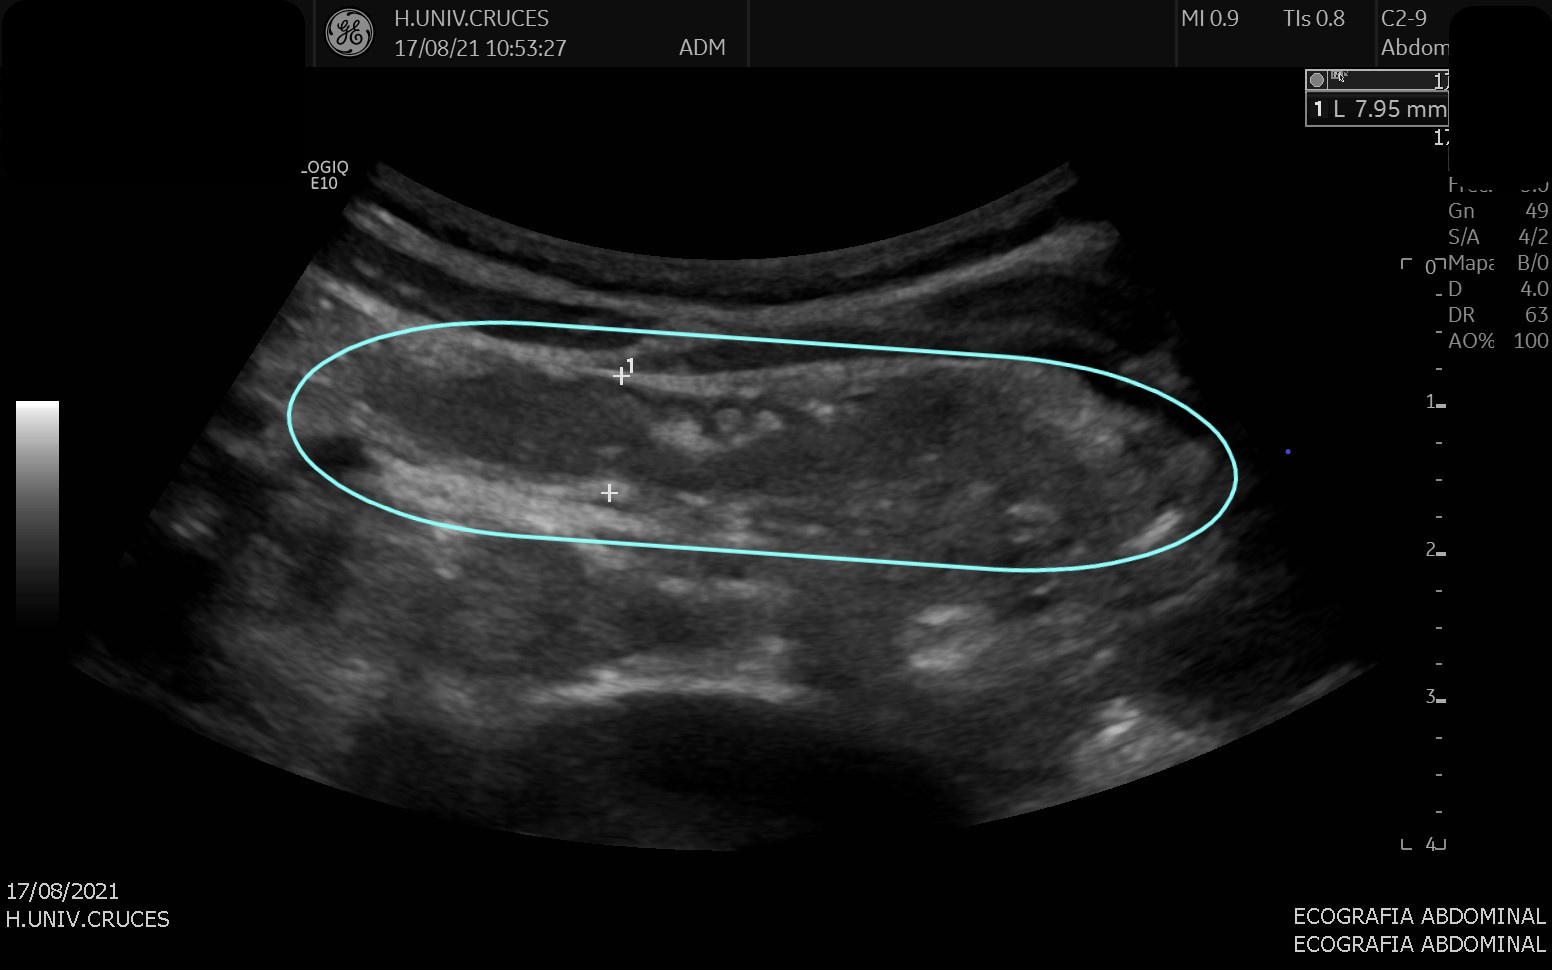 terminal ileum ultrasound